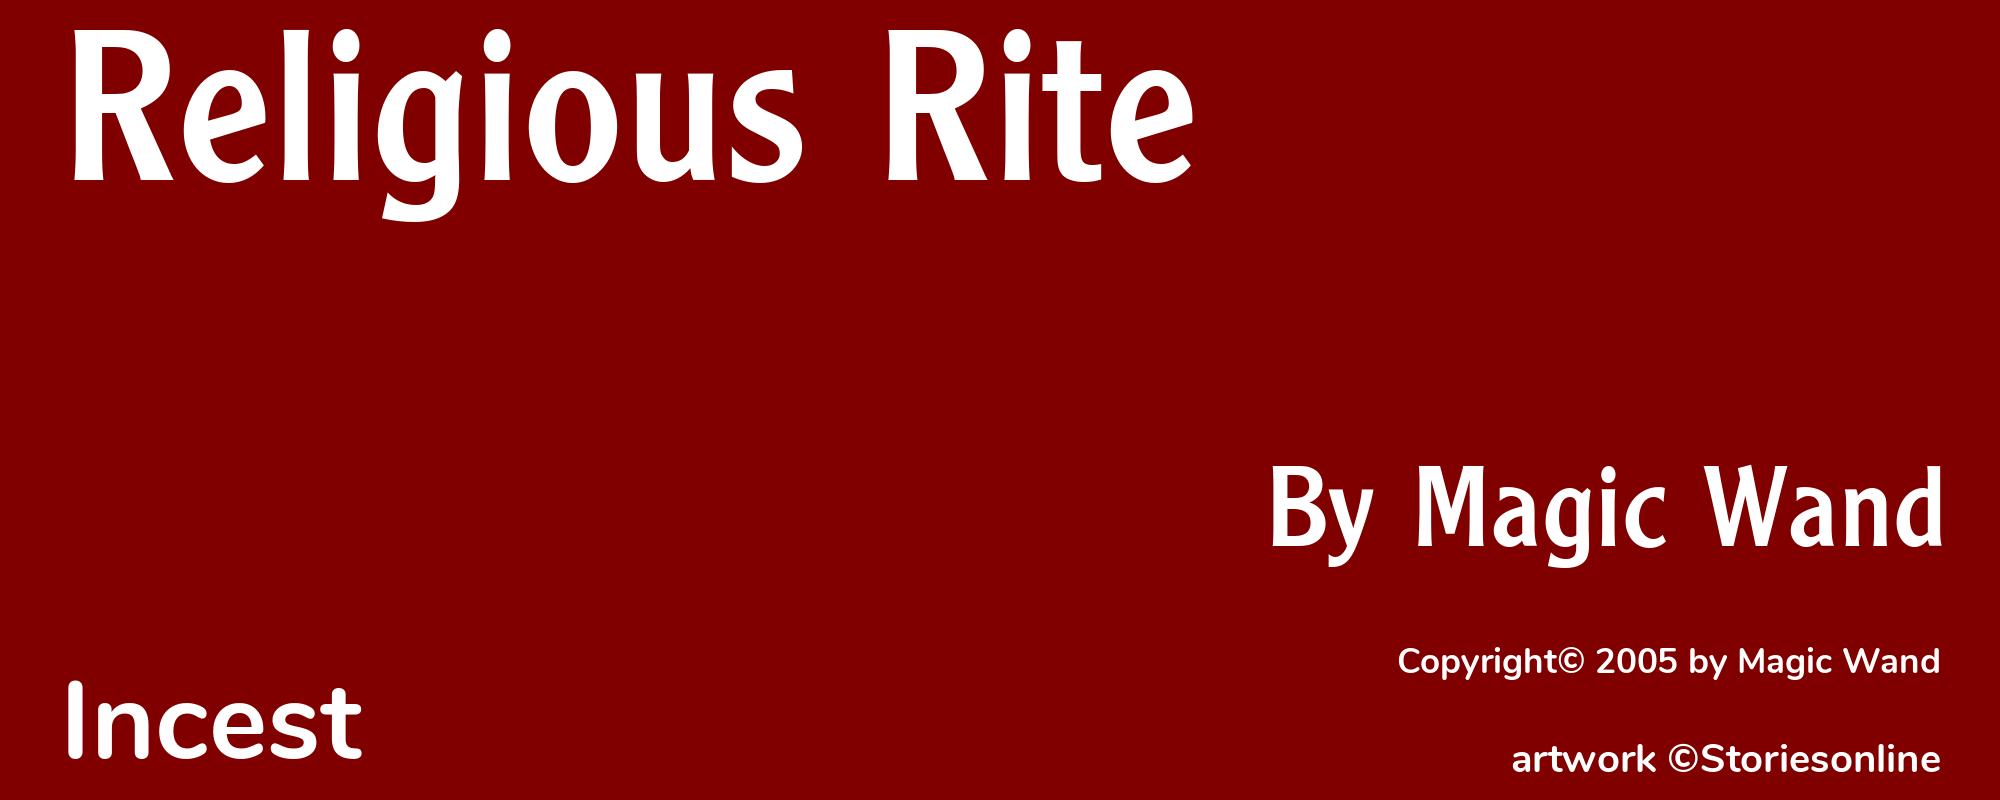 Religious Rite - Cover